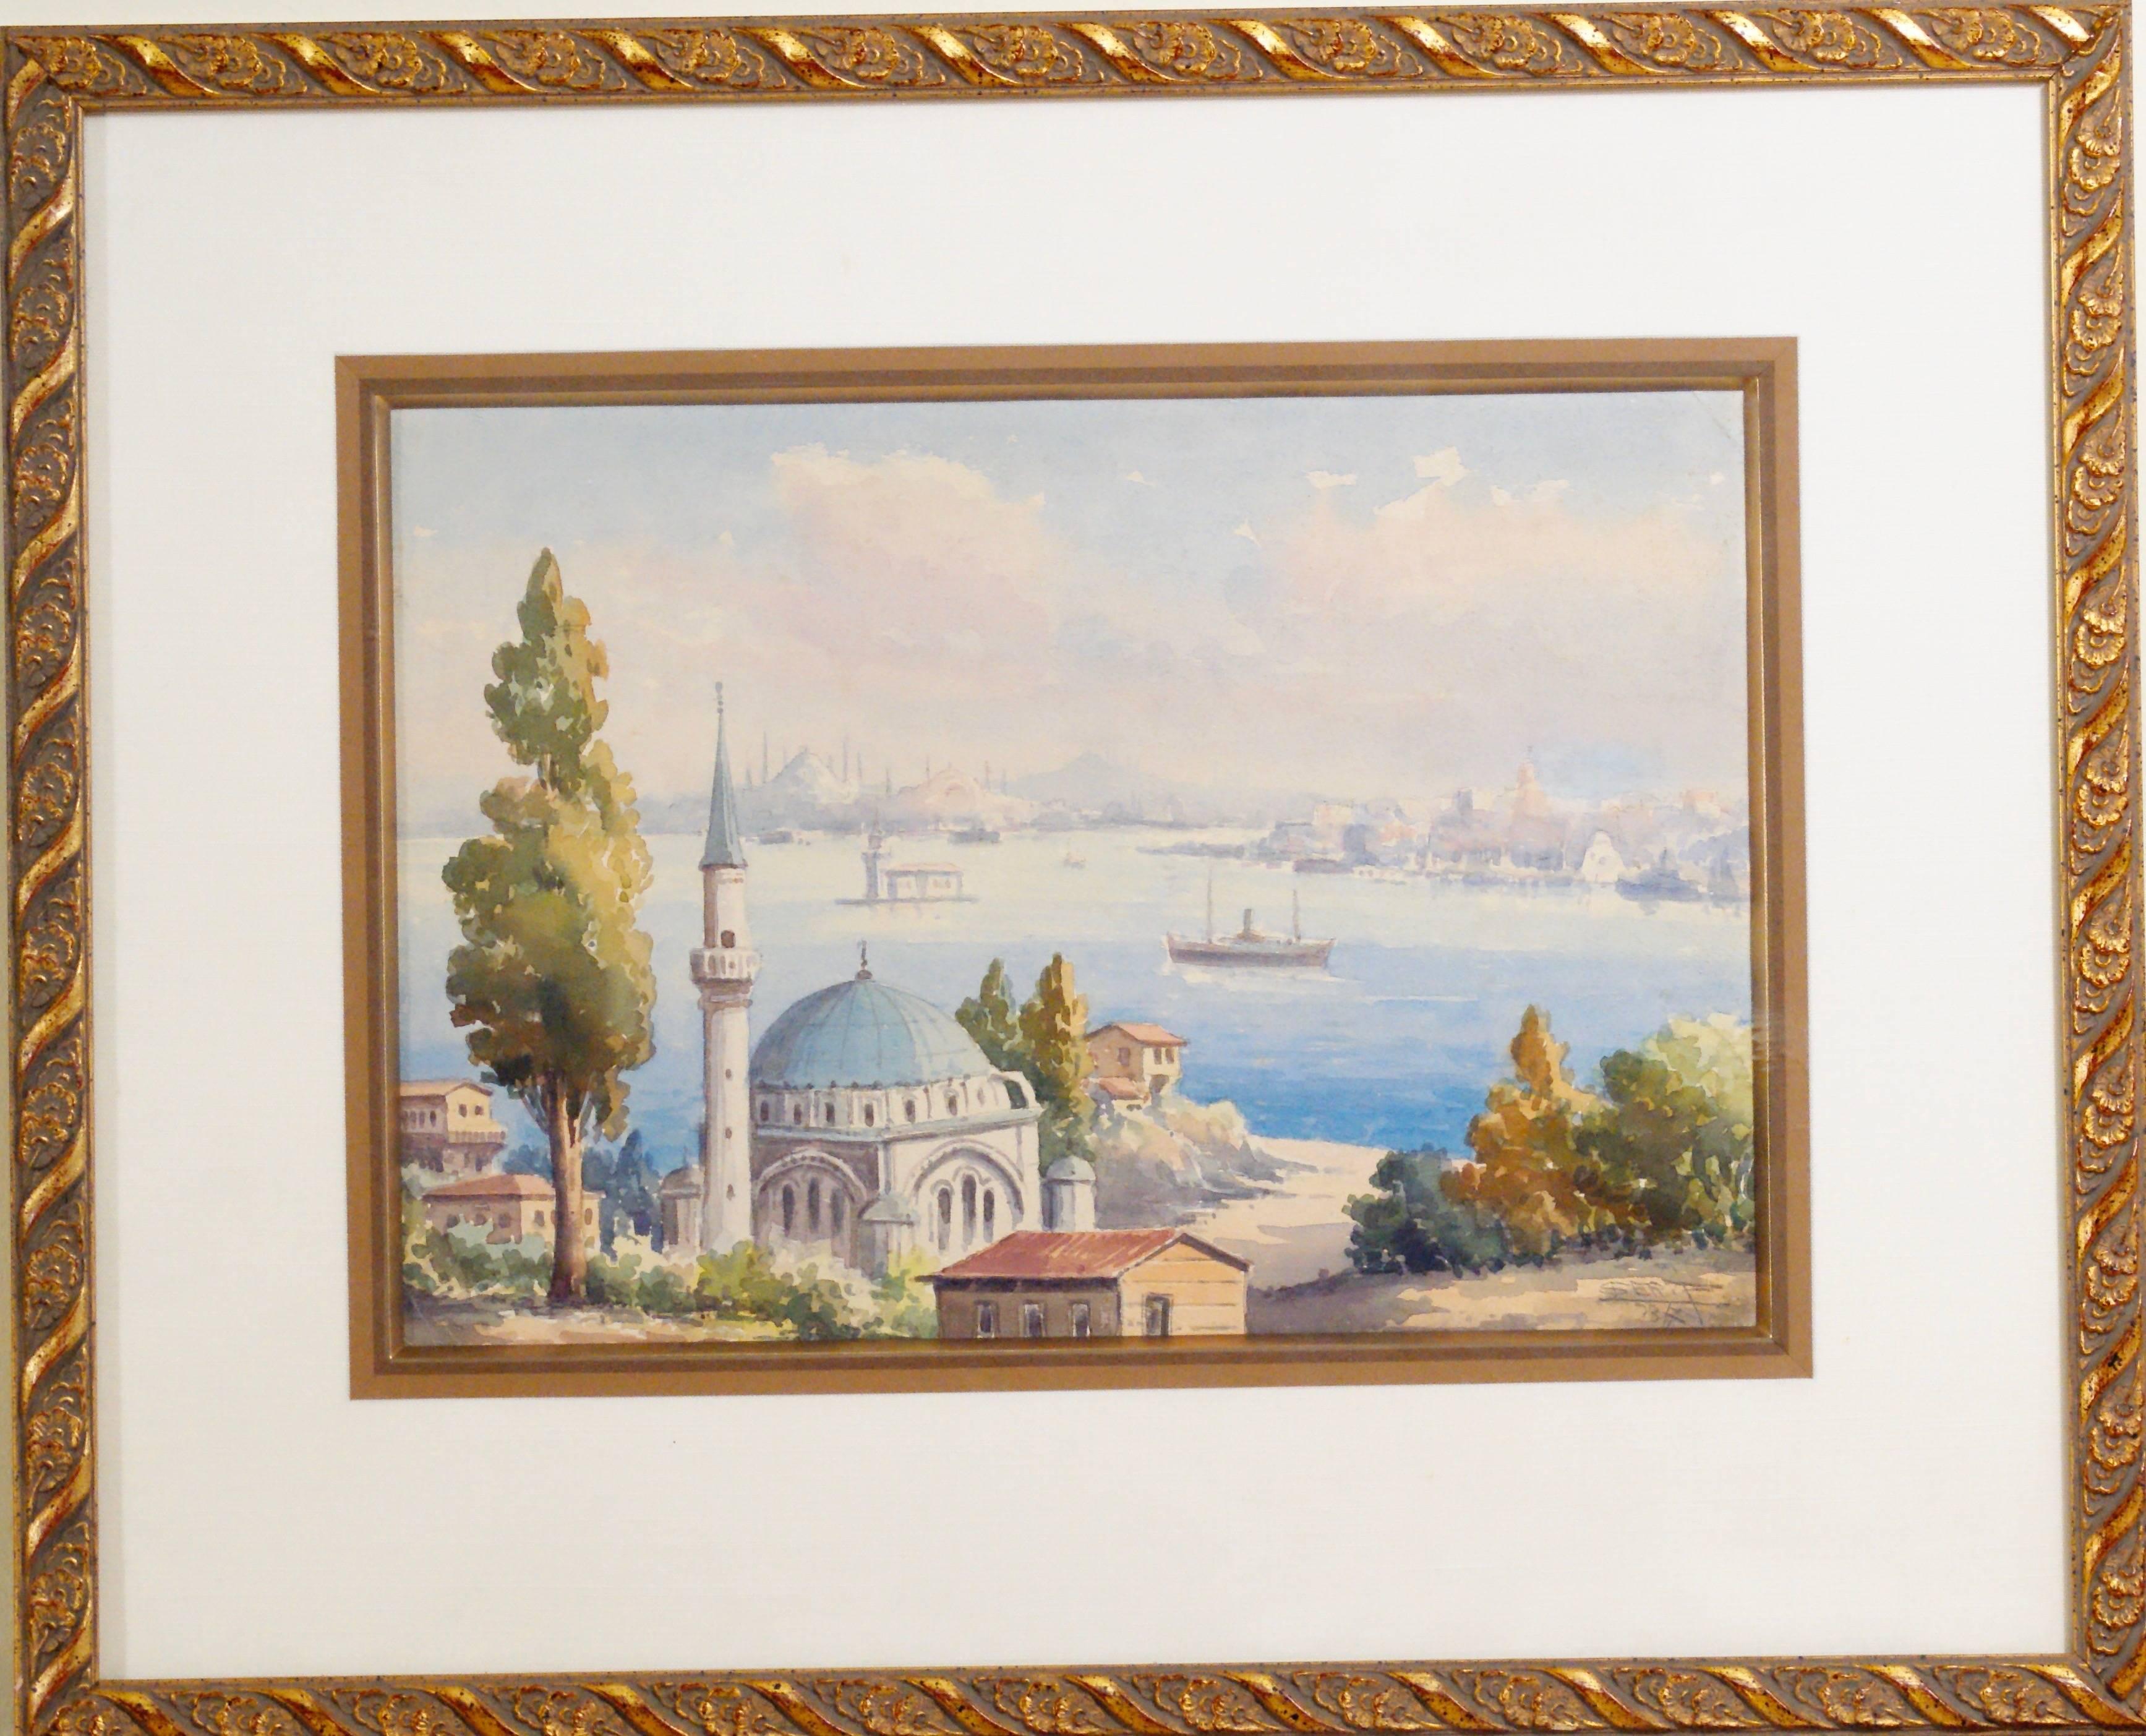 Serif Renkgorur Landscape Painting - Harbor Scene, Istanbul